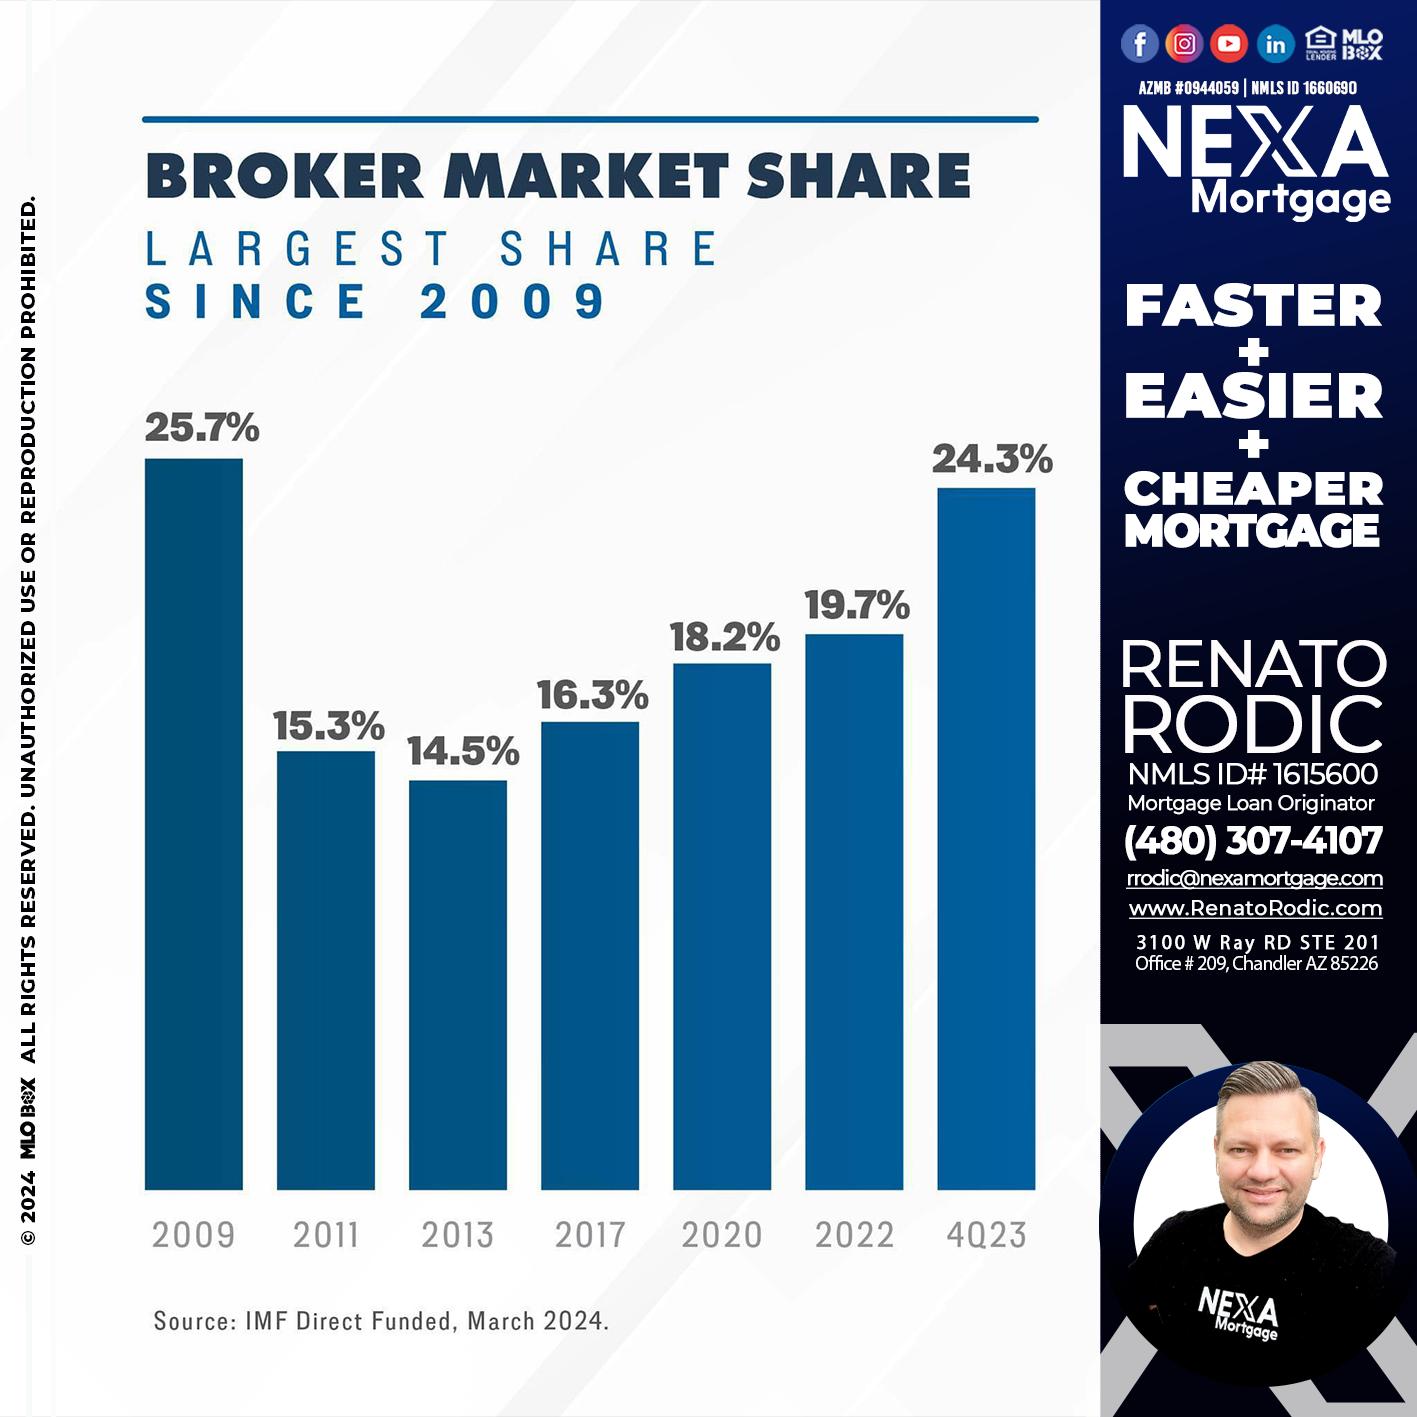 broker market - Renato Rodic -Mortgage Loan Originator